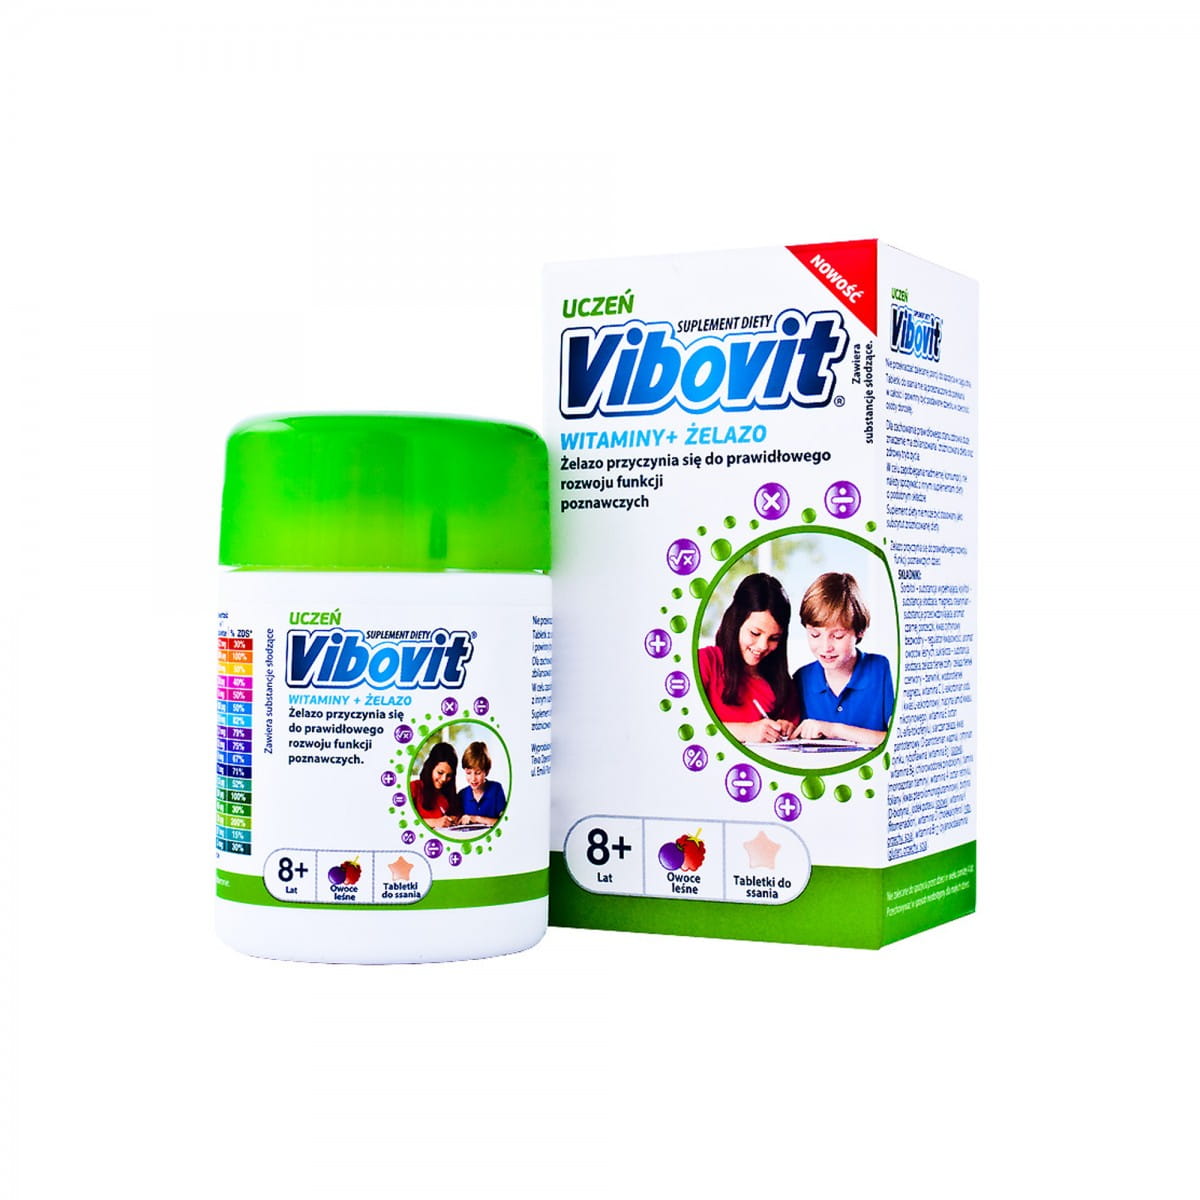 Vitamins + Iron 30 tablets - VIBOVIT